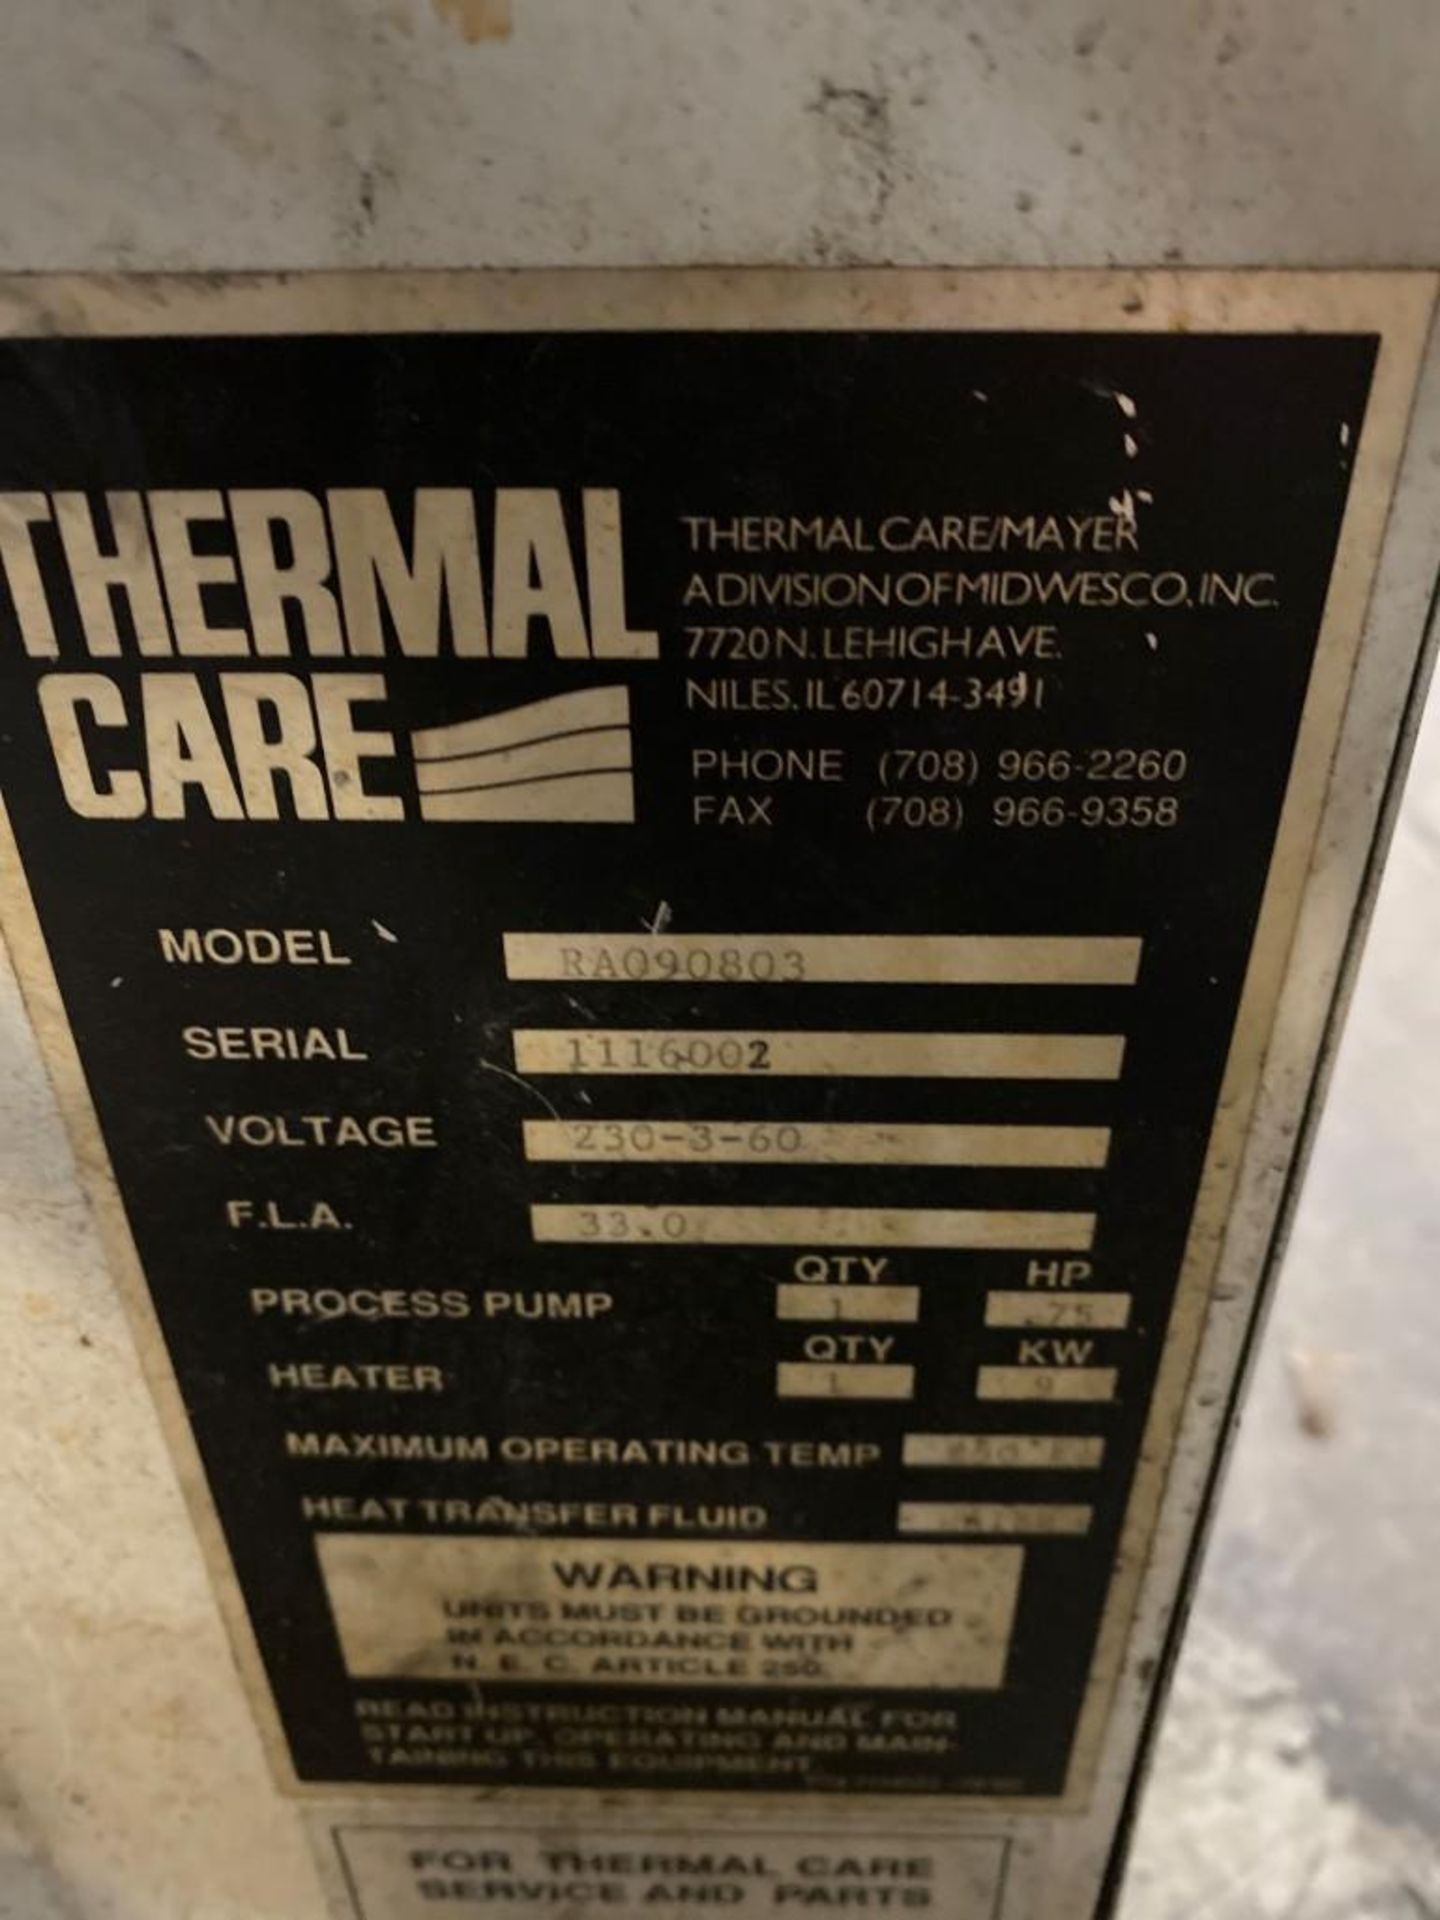 Thermalcare Aquatherm RA090803 Temperature Controller - Image 5 of 5